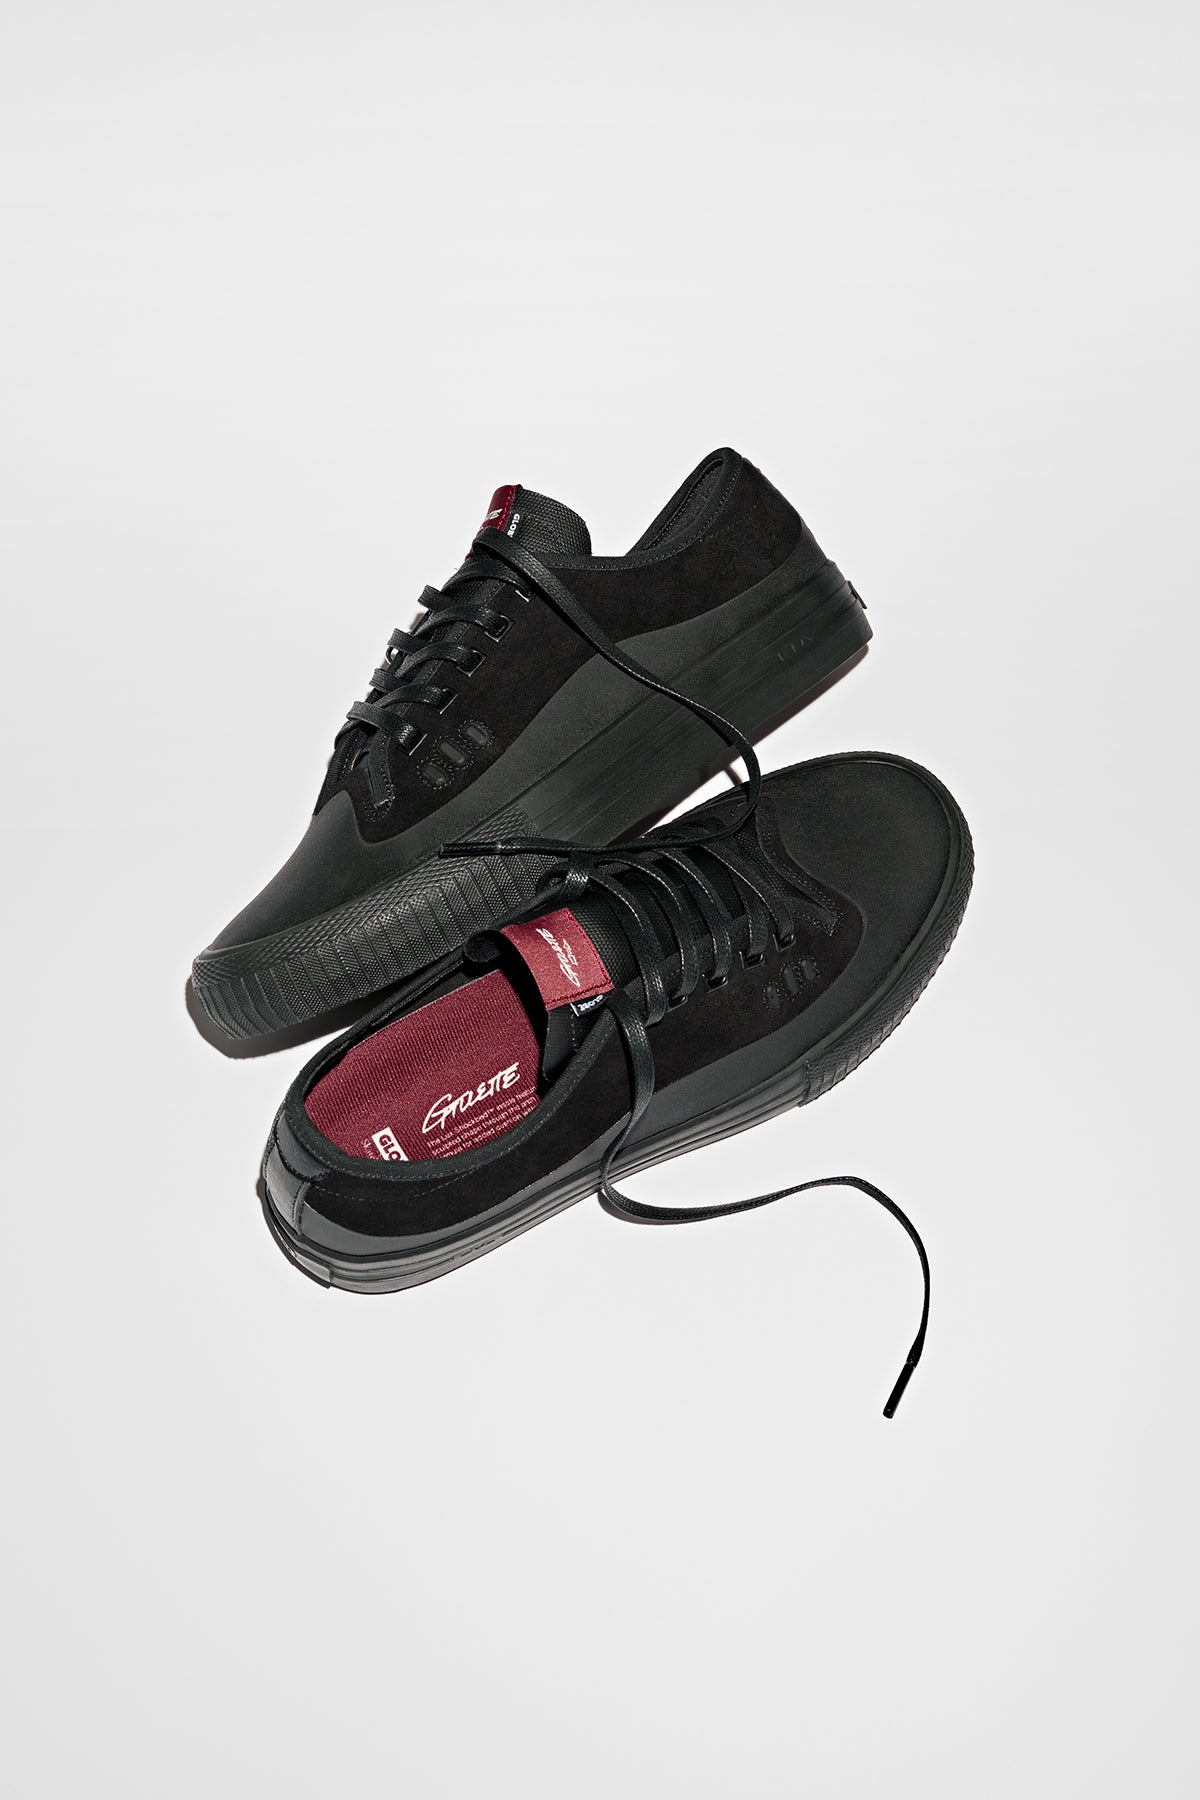 Gillette - Black/Black Wildleder - skateboard Schuhe